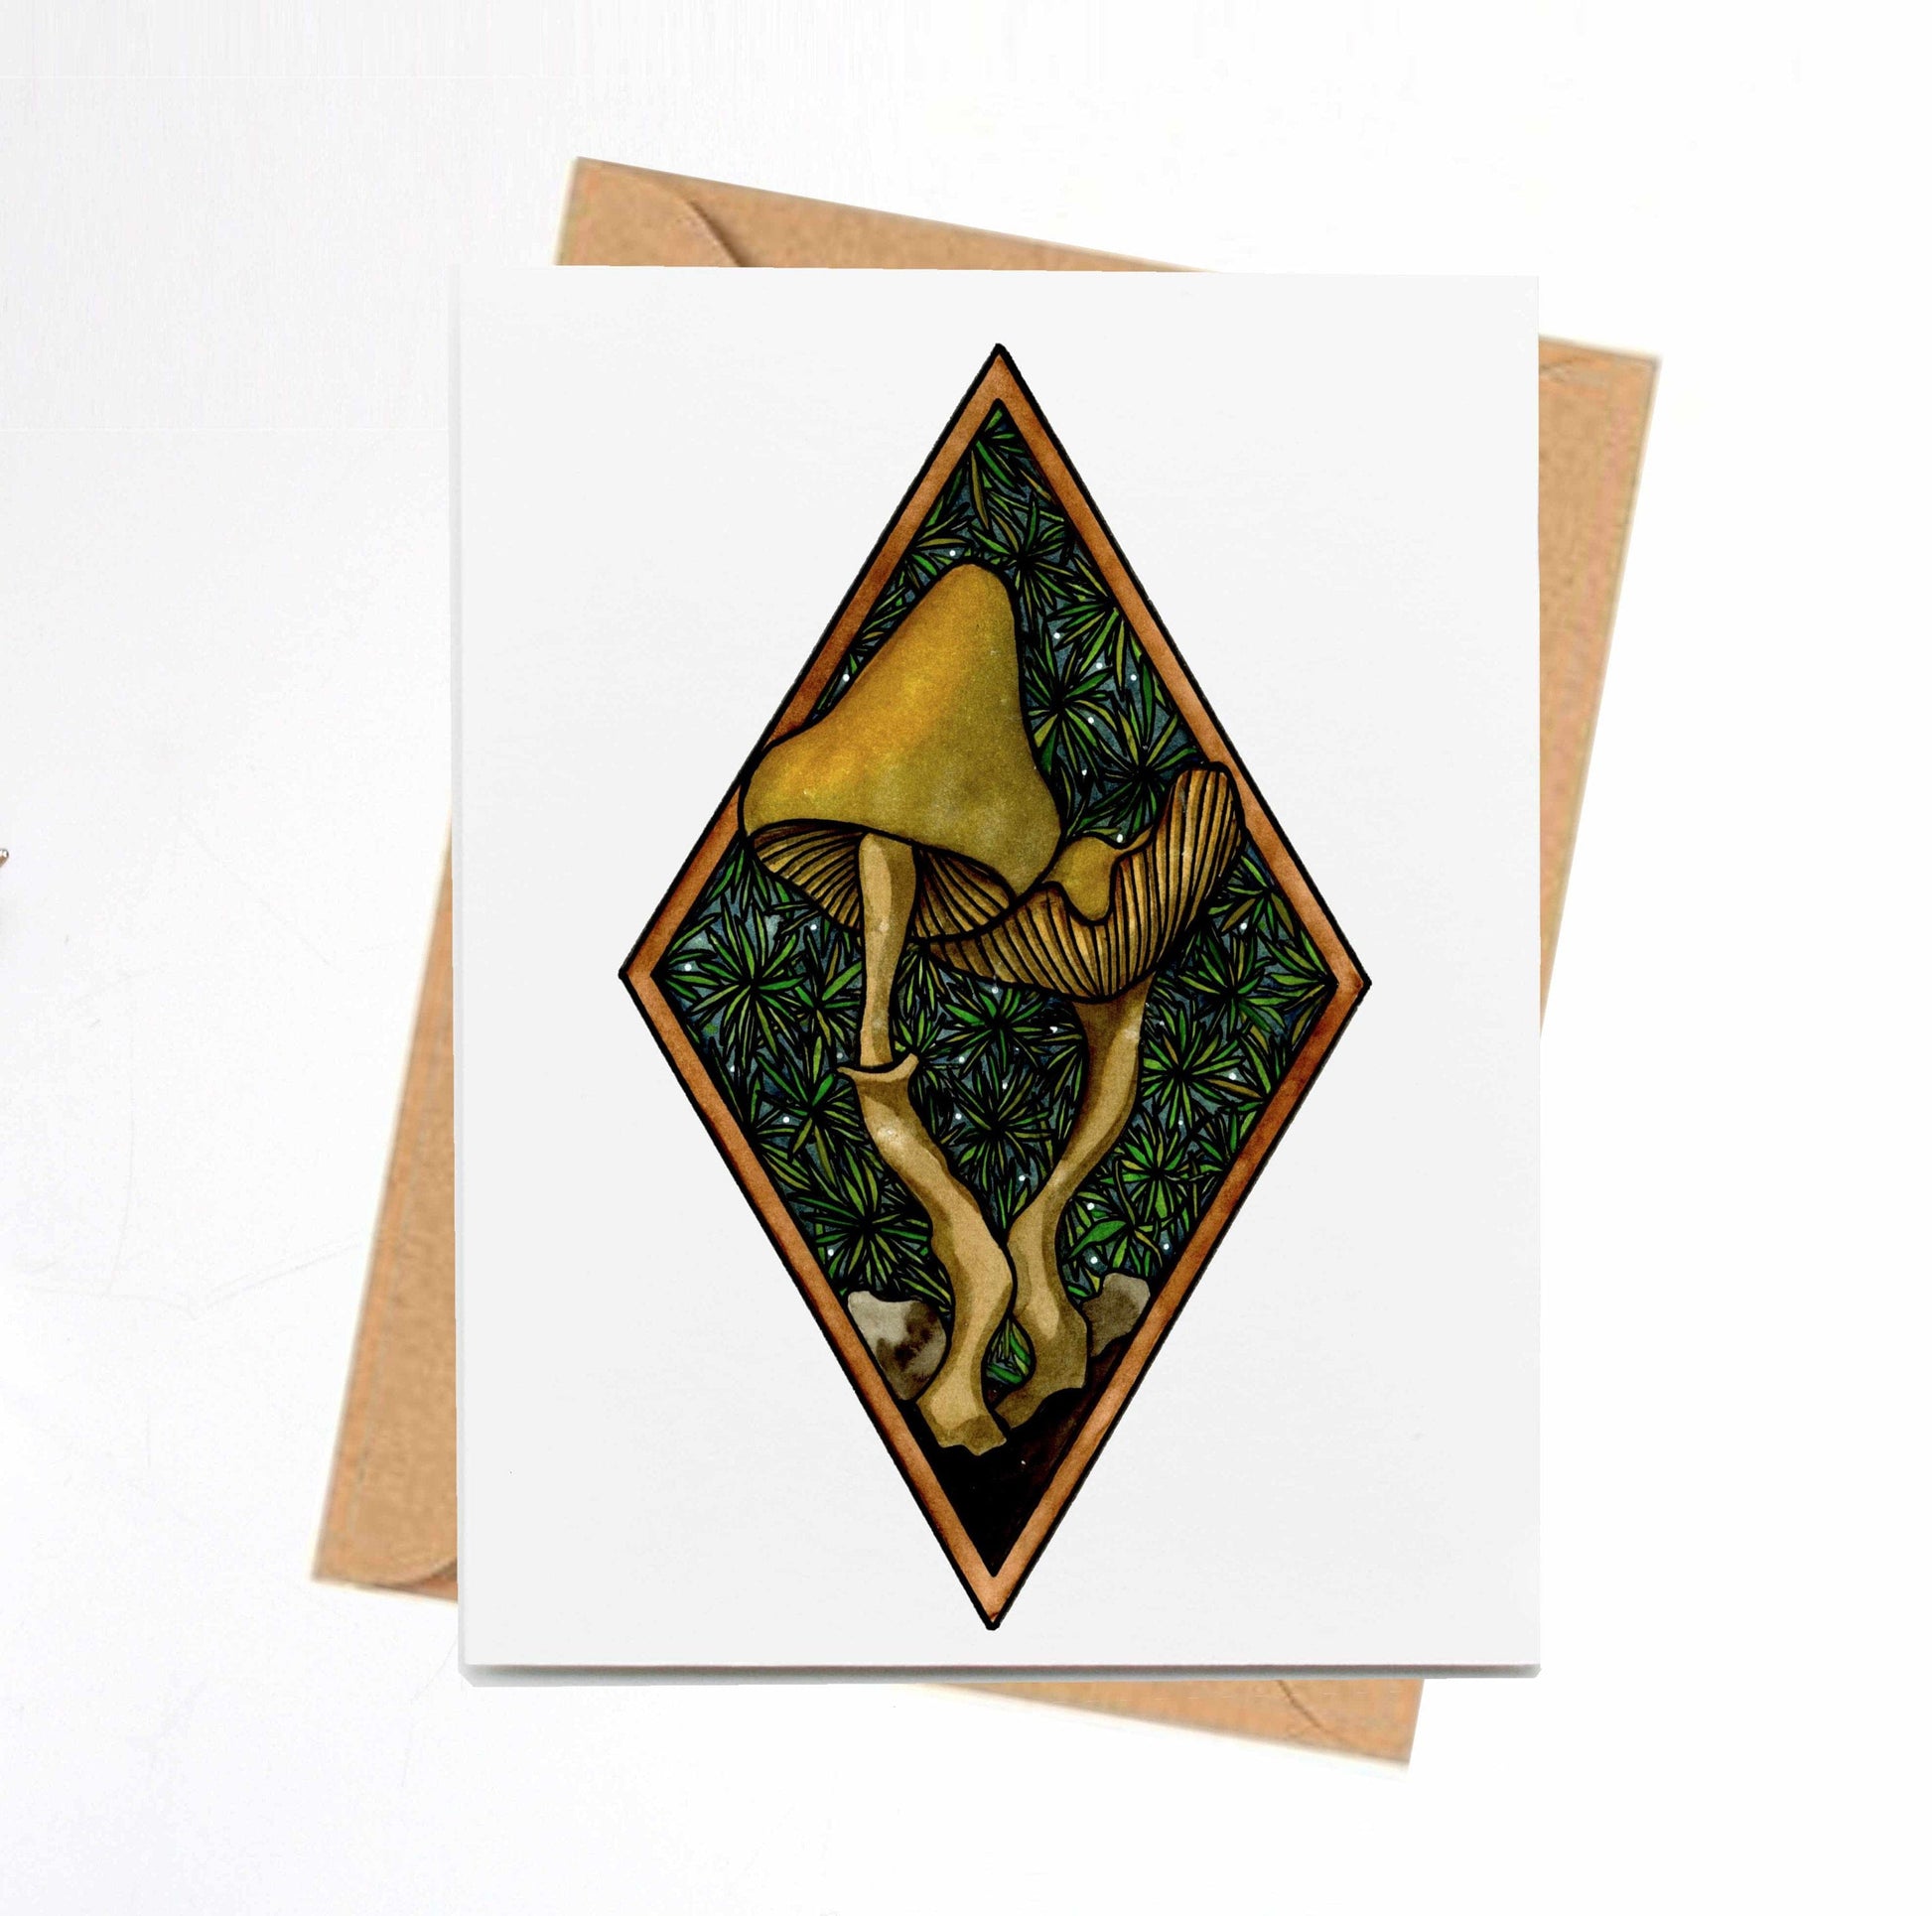 PinkPolish Design Note Cards "Dancing Mushrooms" Handmade Notecard